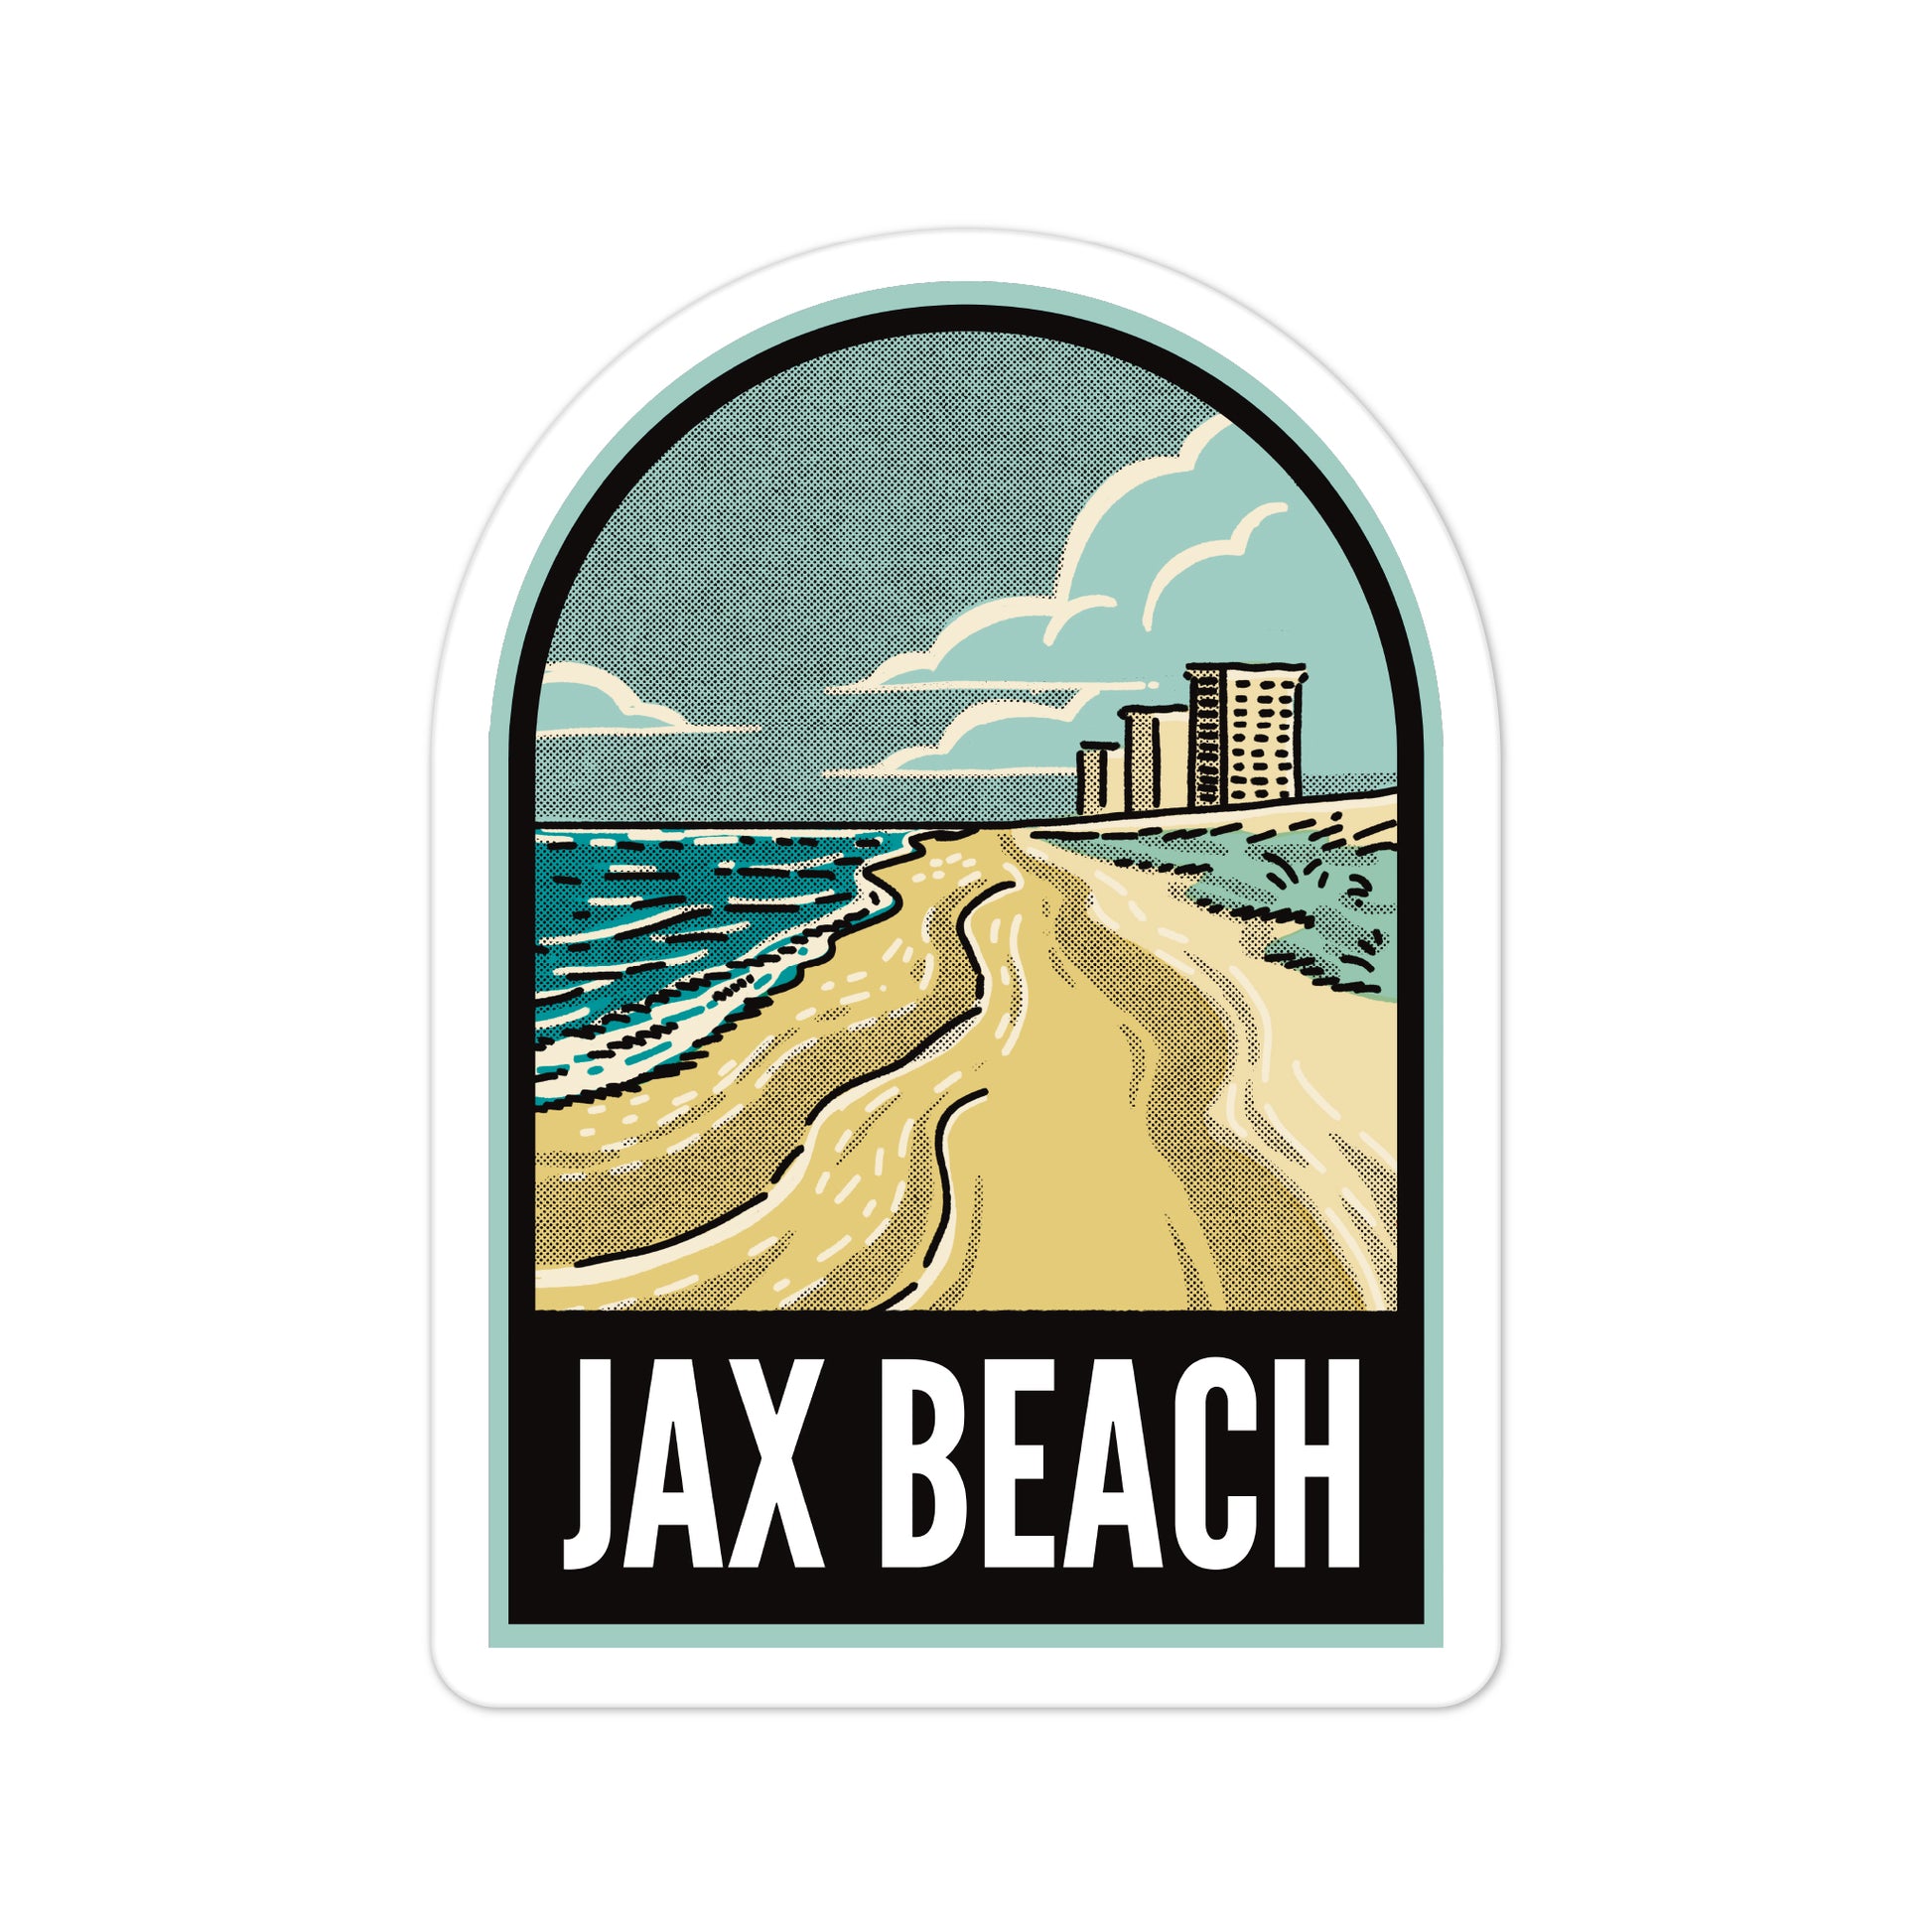 A sticker of Jax Beach Florida